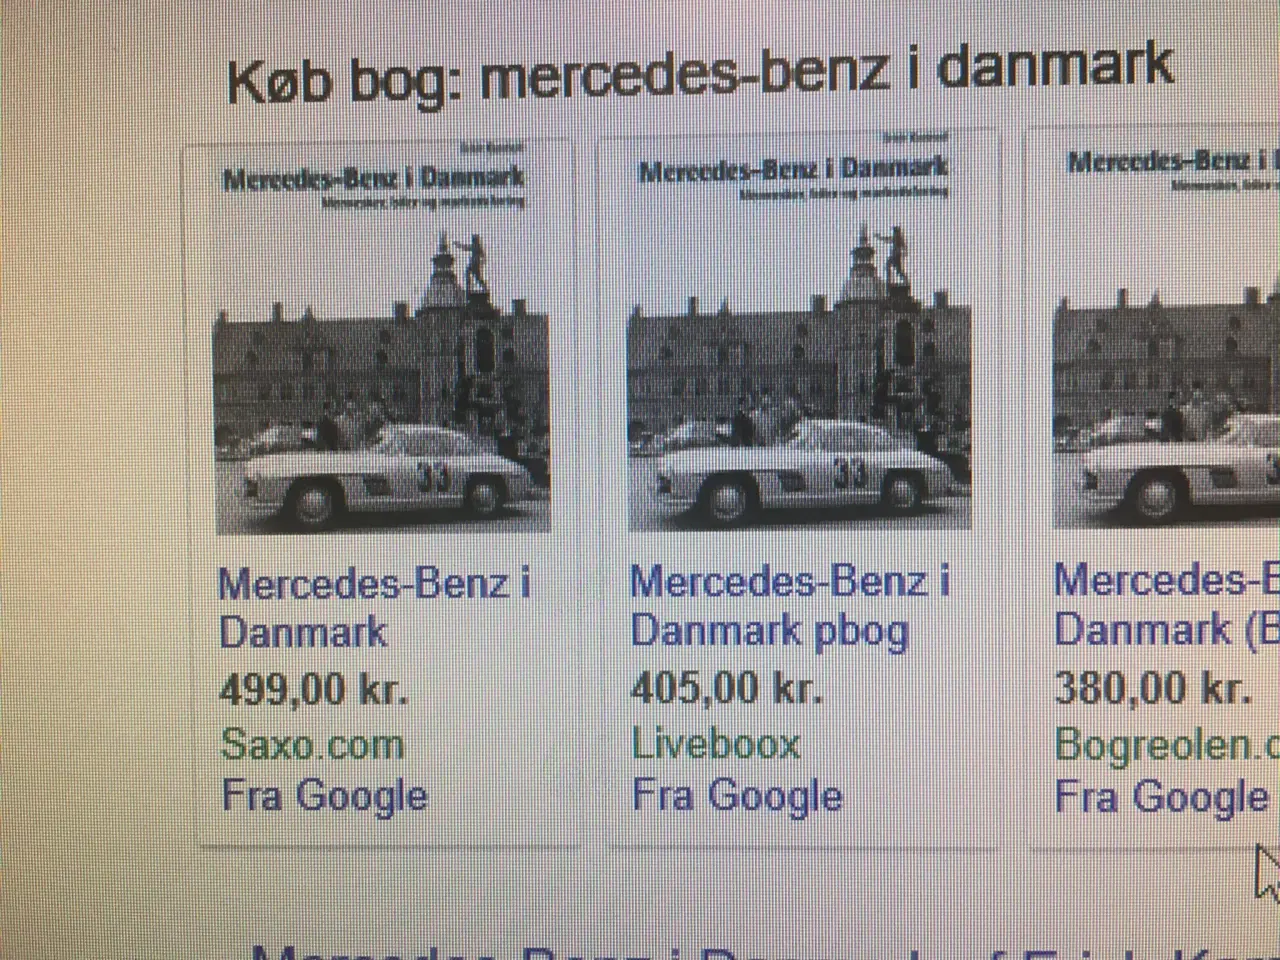 Billede 2 - Mercedes-Benz i Danmark